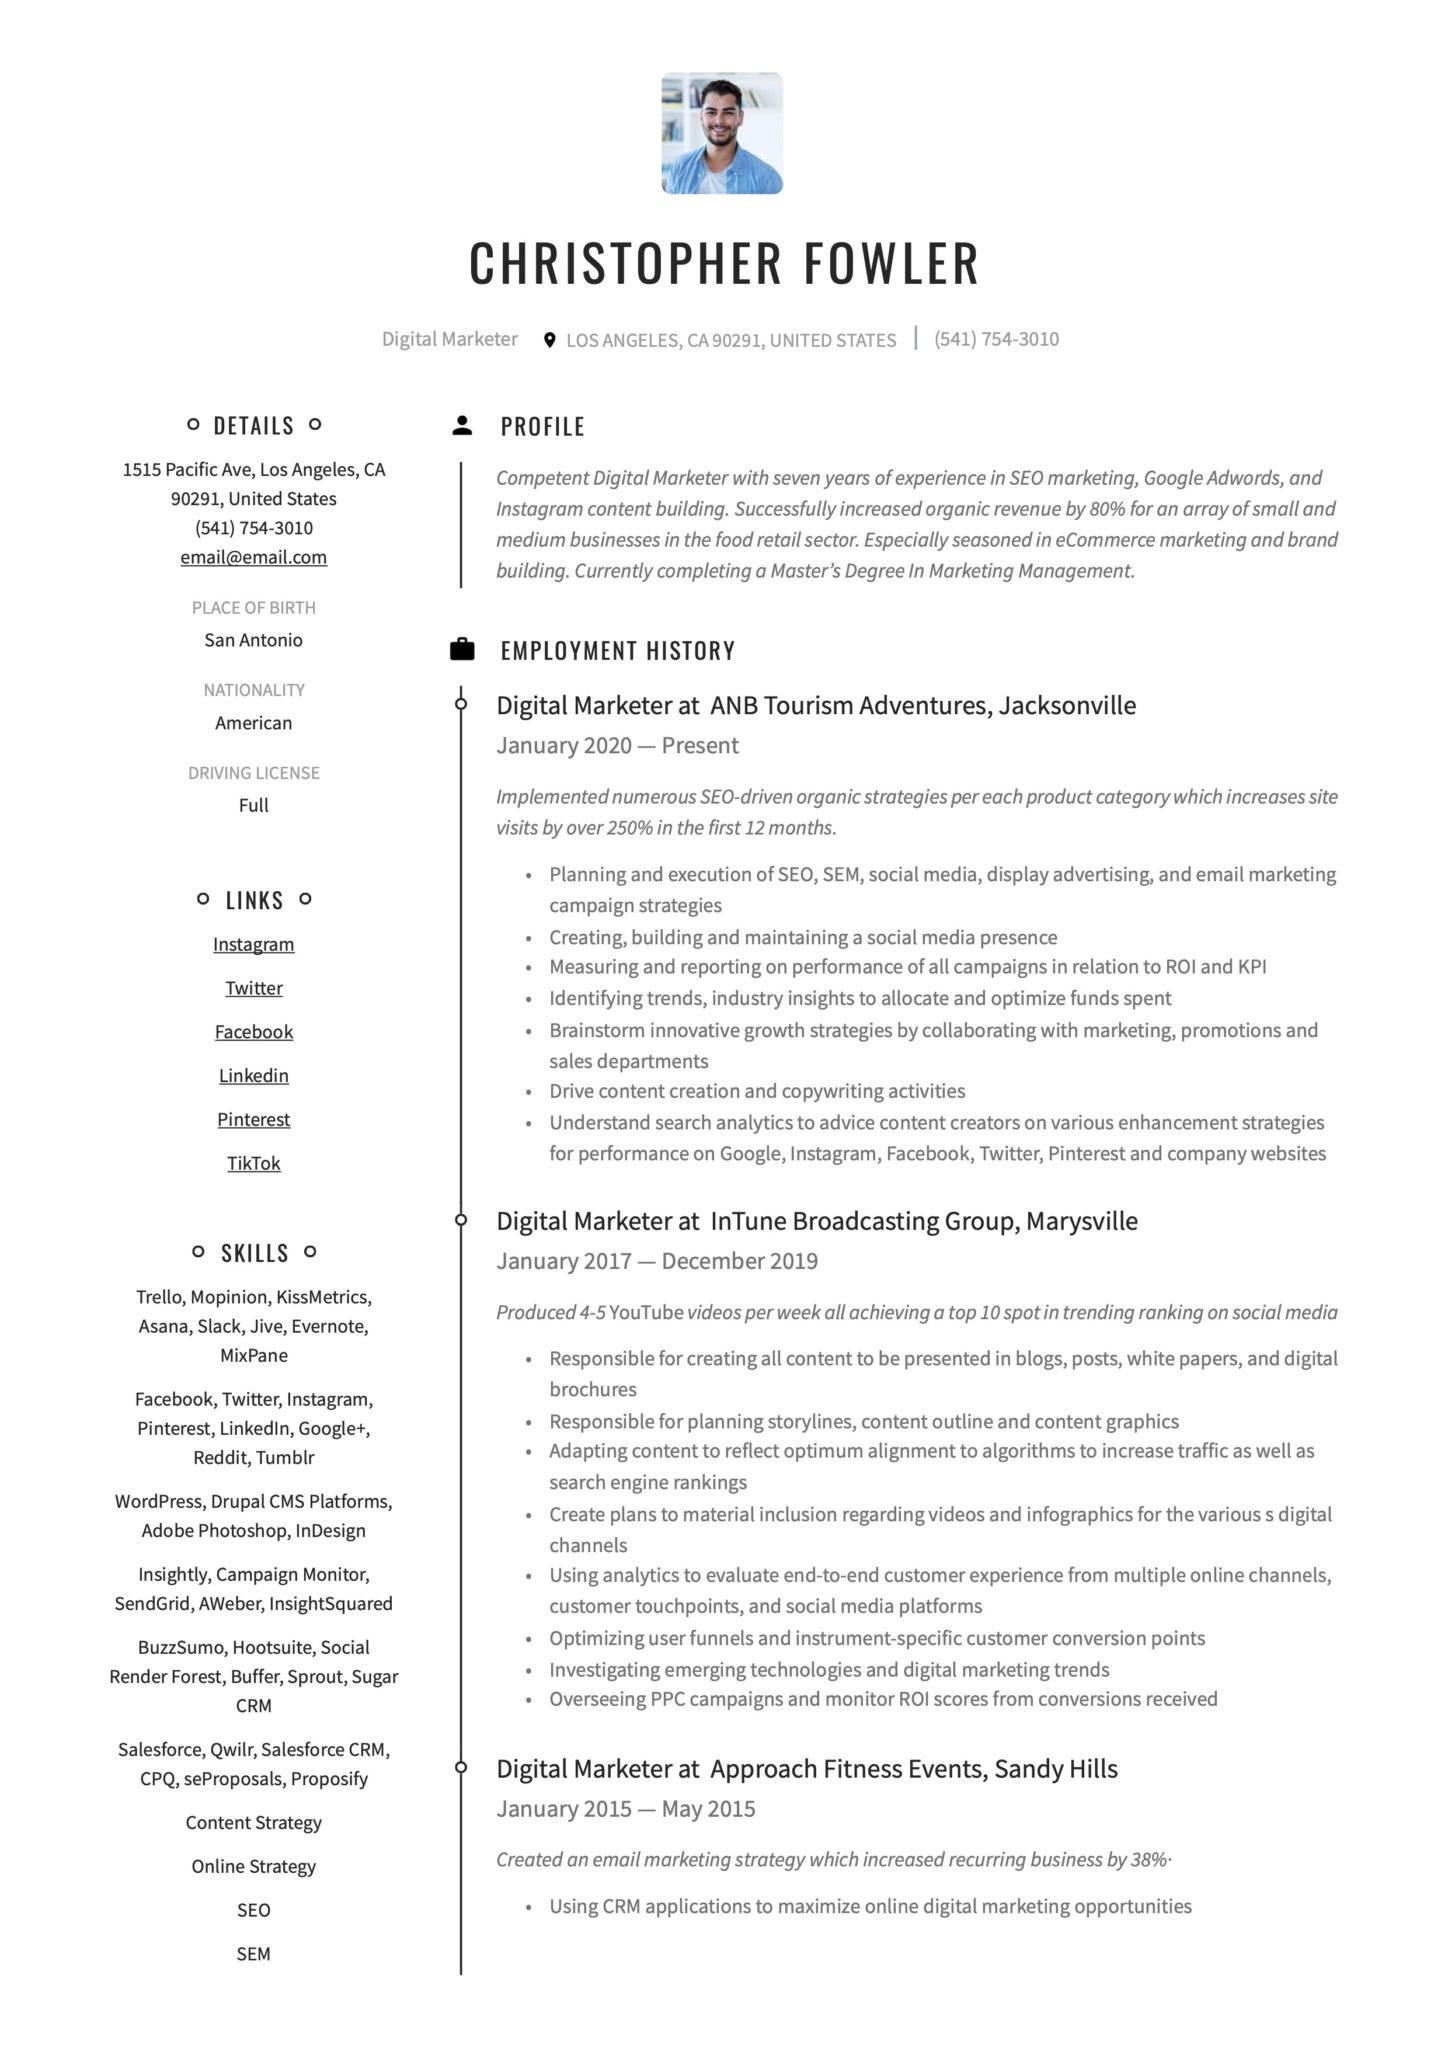 Sample Resume for Digital Marketing Executive 19 Digital Marketer Resume Examples & Guide 2020 Pdf